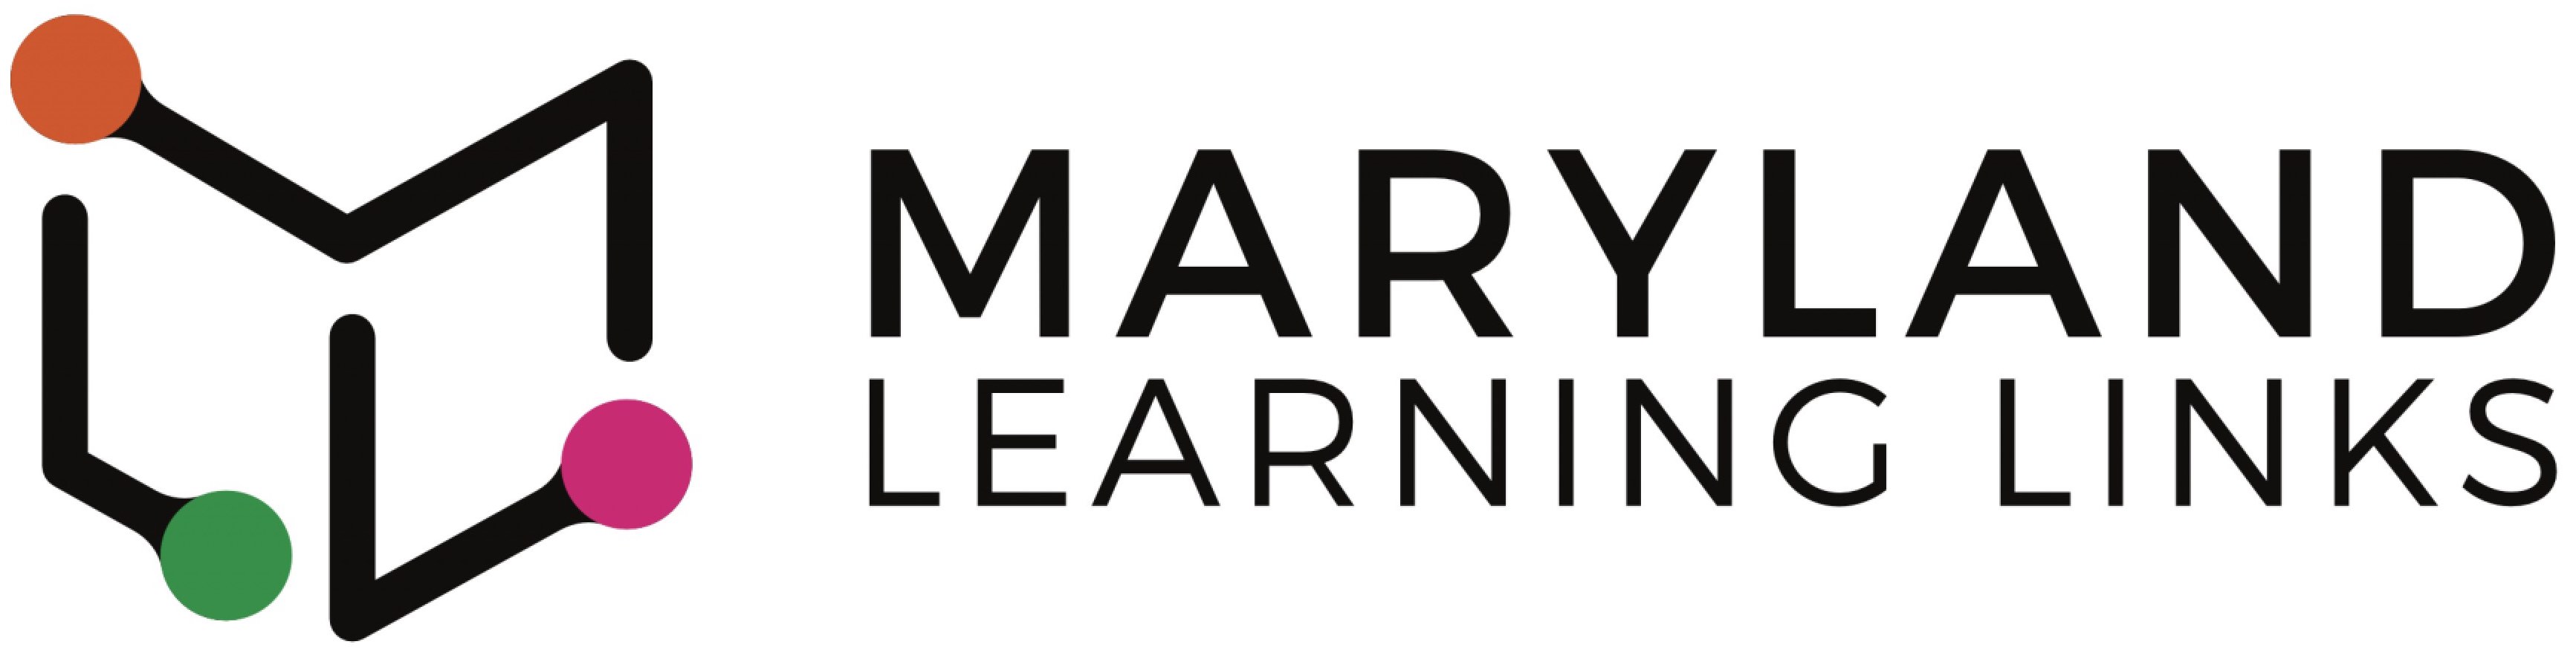 Maryland Learning Links